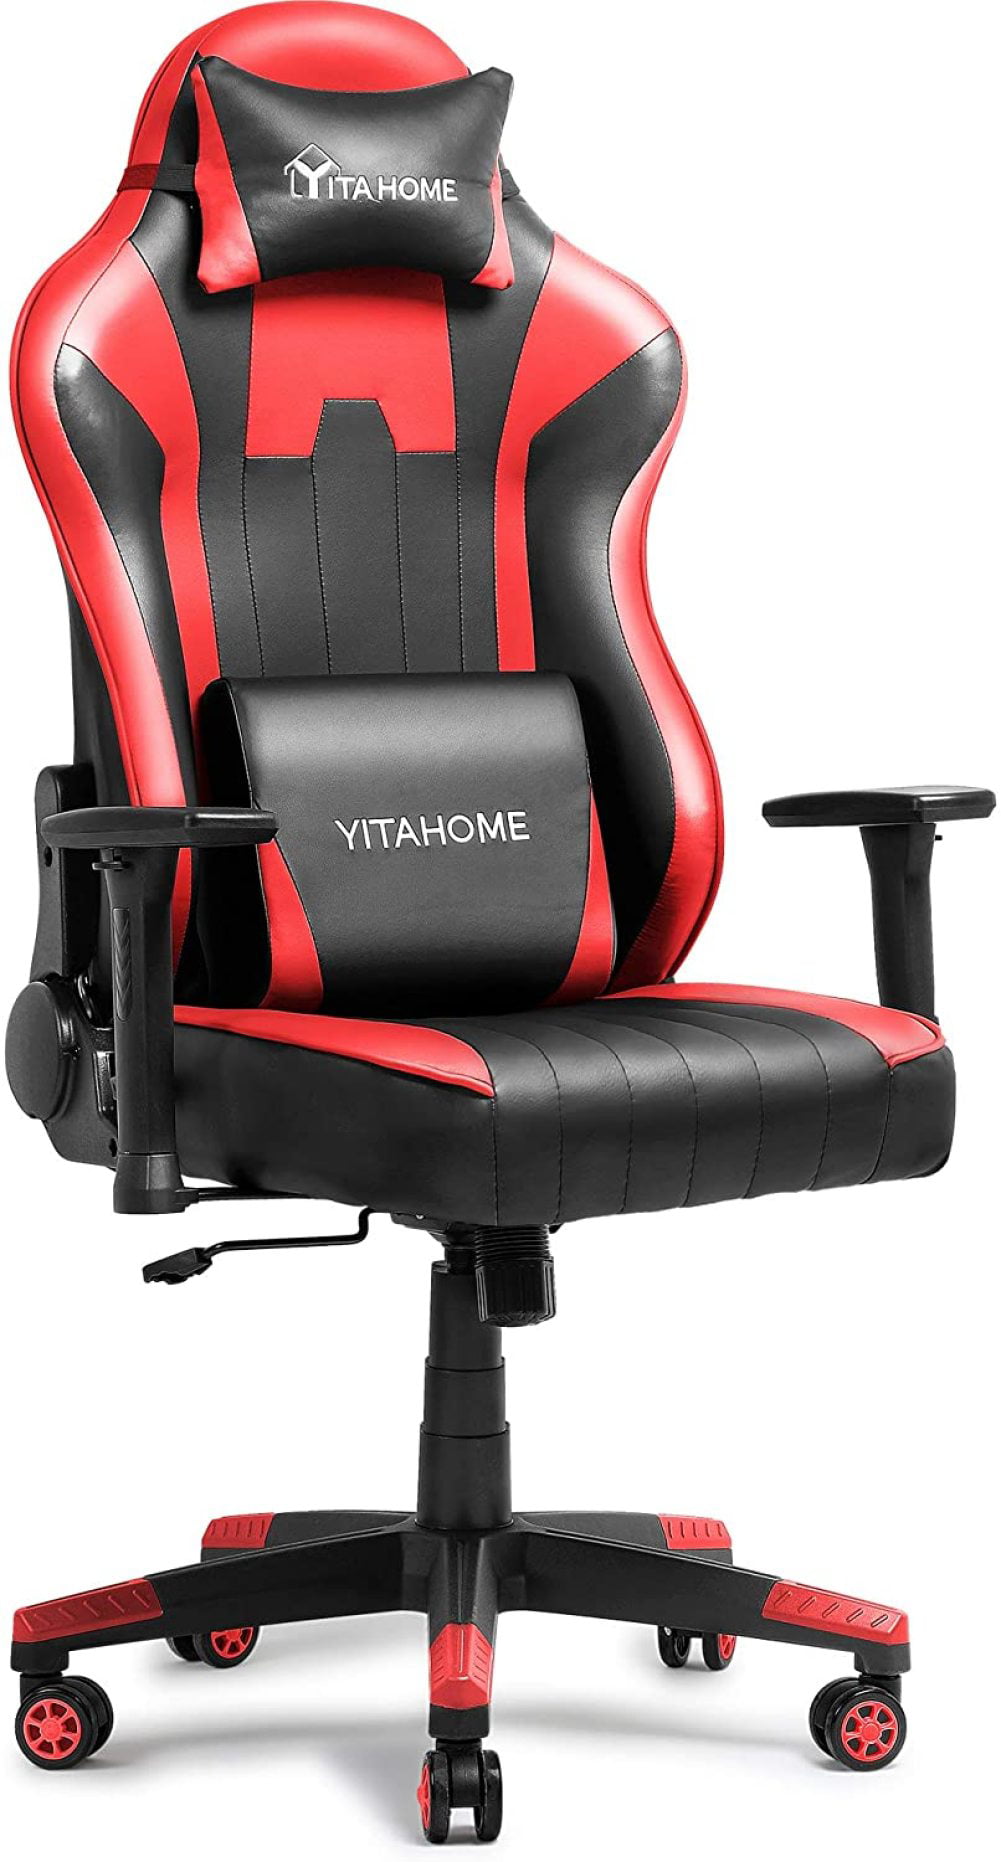 YITAHOME Racing Computer Gaming Chair Office Home Swivel Ergonomic Massage Chair 